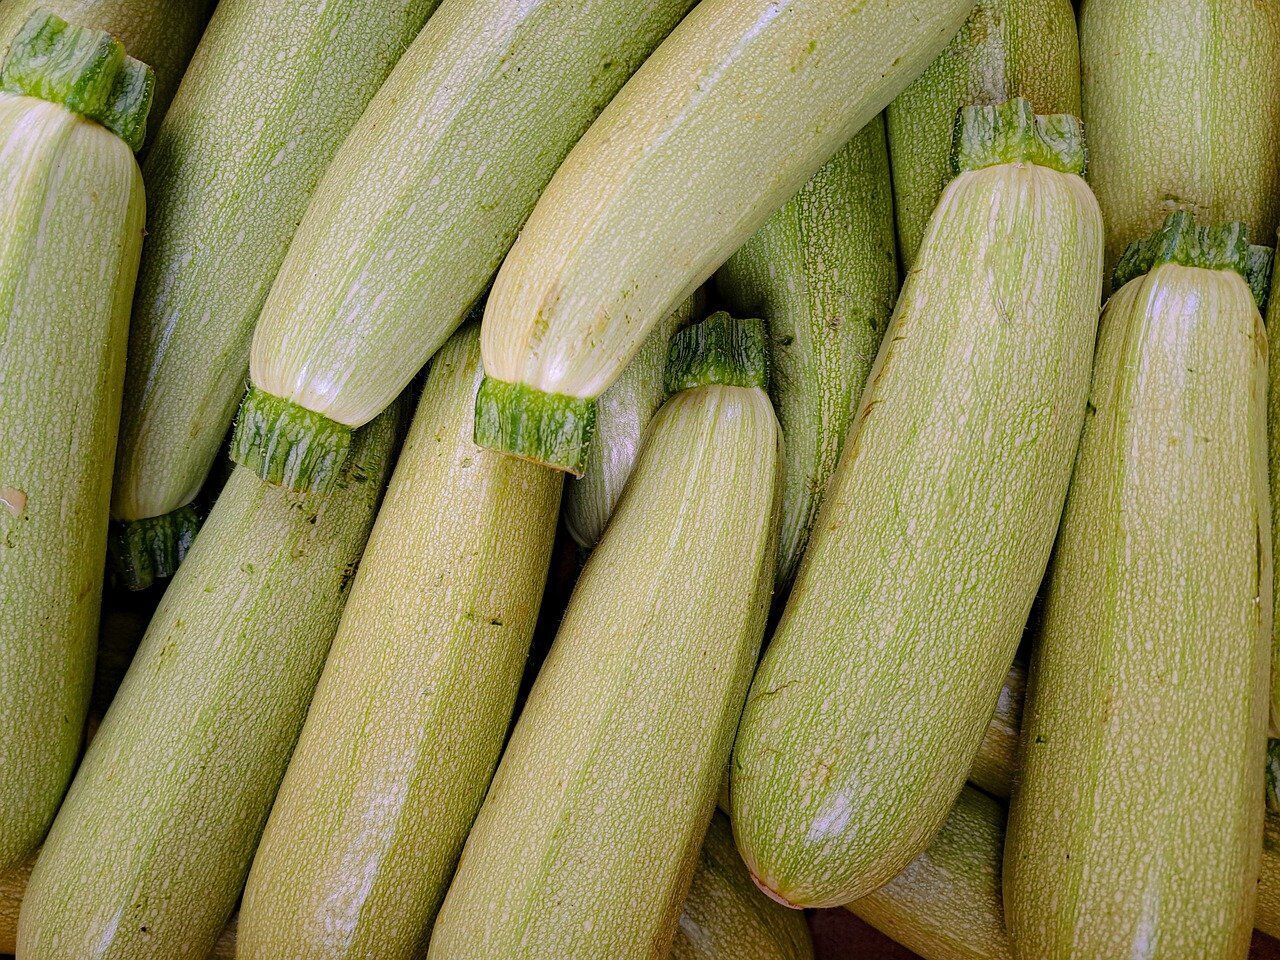 Recipes from zucchini